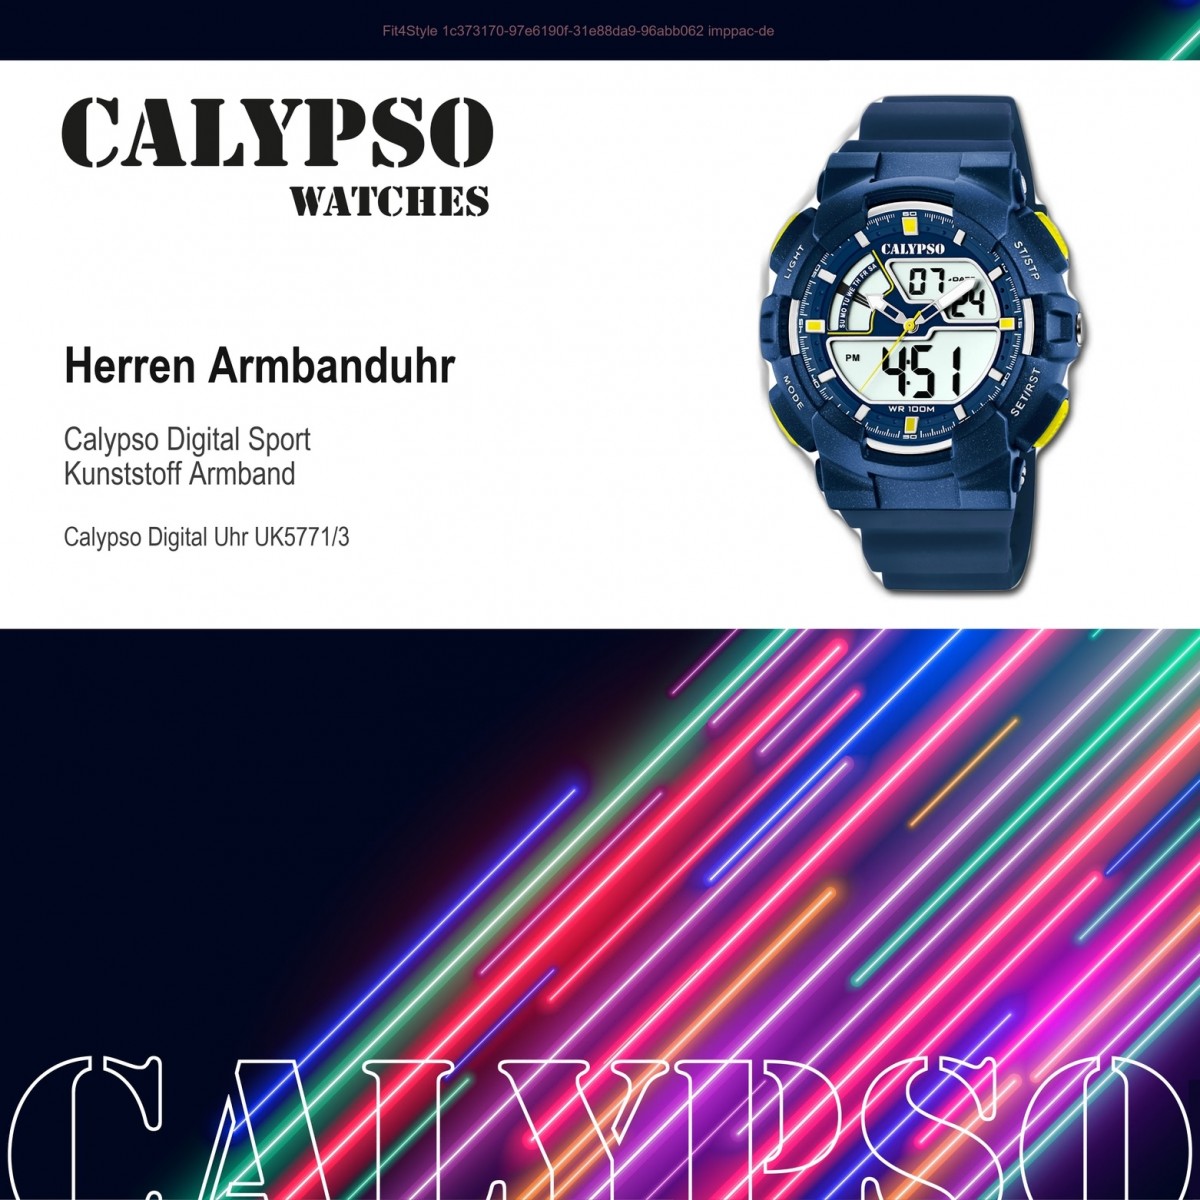 Calypso Herren Armbanduhr Street Quarz-Uhr PU Style UK5771/3 K5771/3 blau